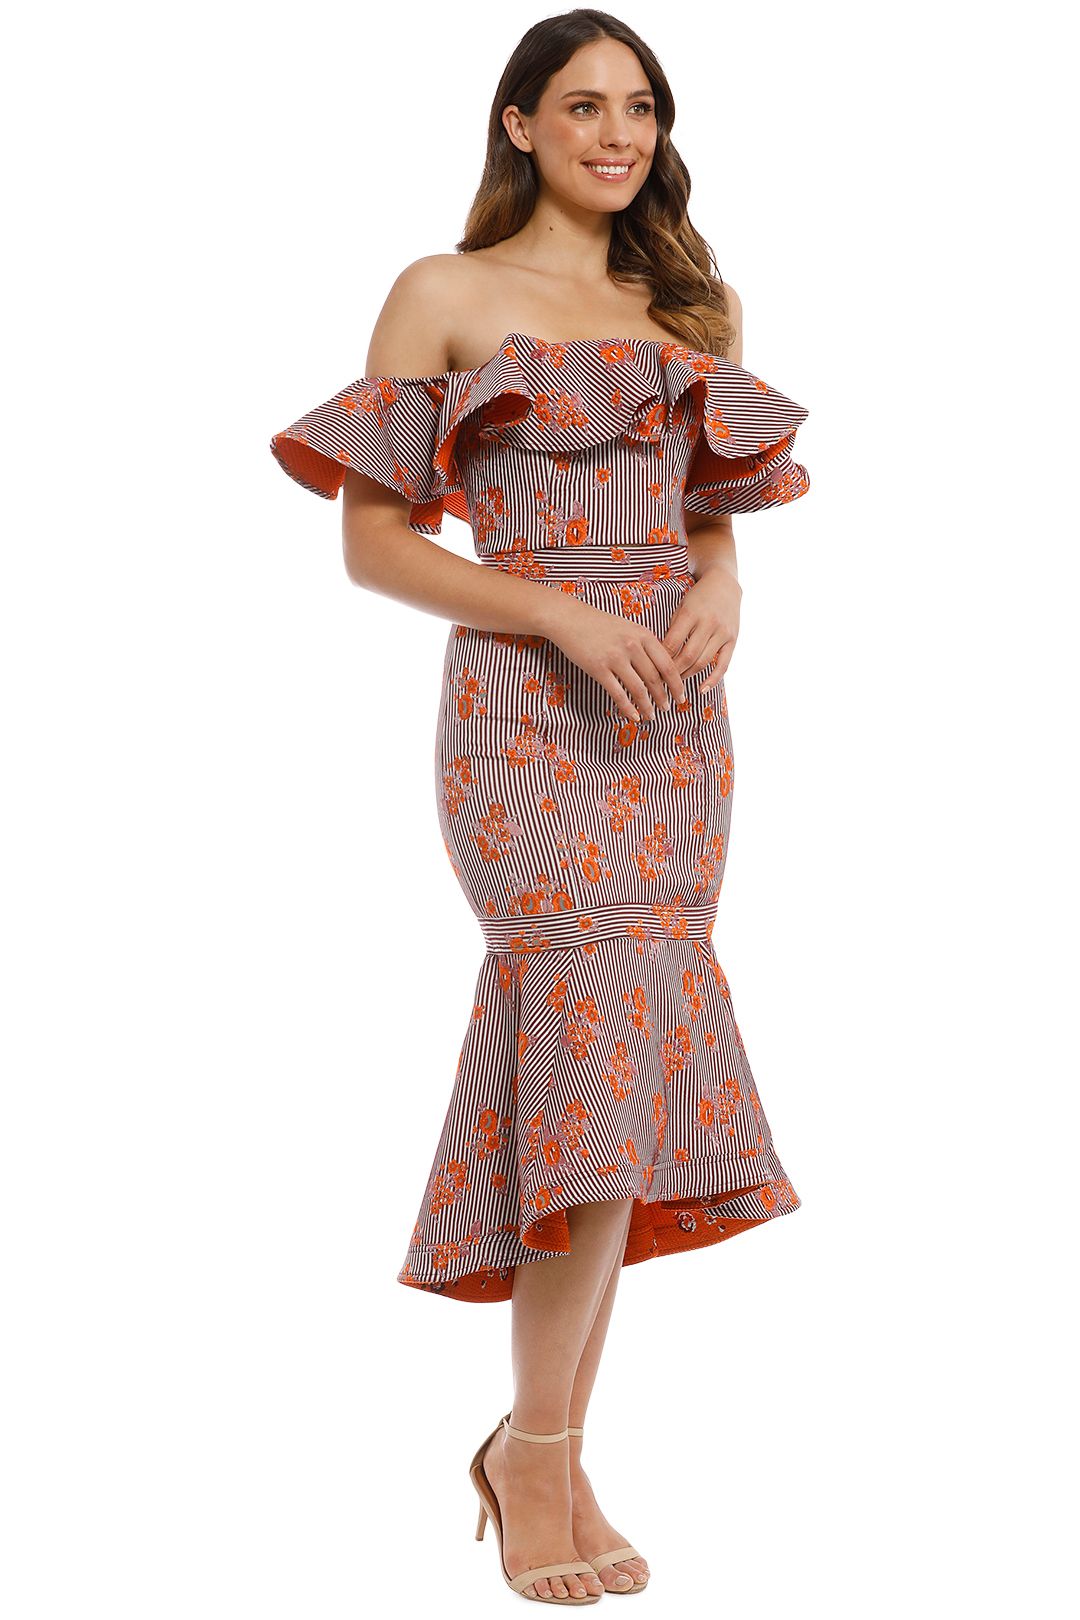 Keepsake The Label - Fixation Top and Skirt Set - Orange Print - Side